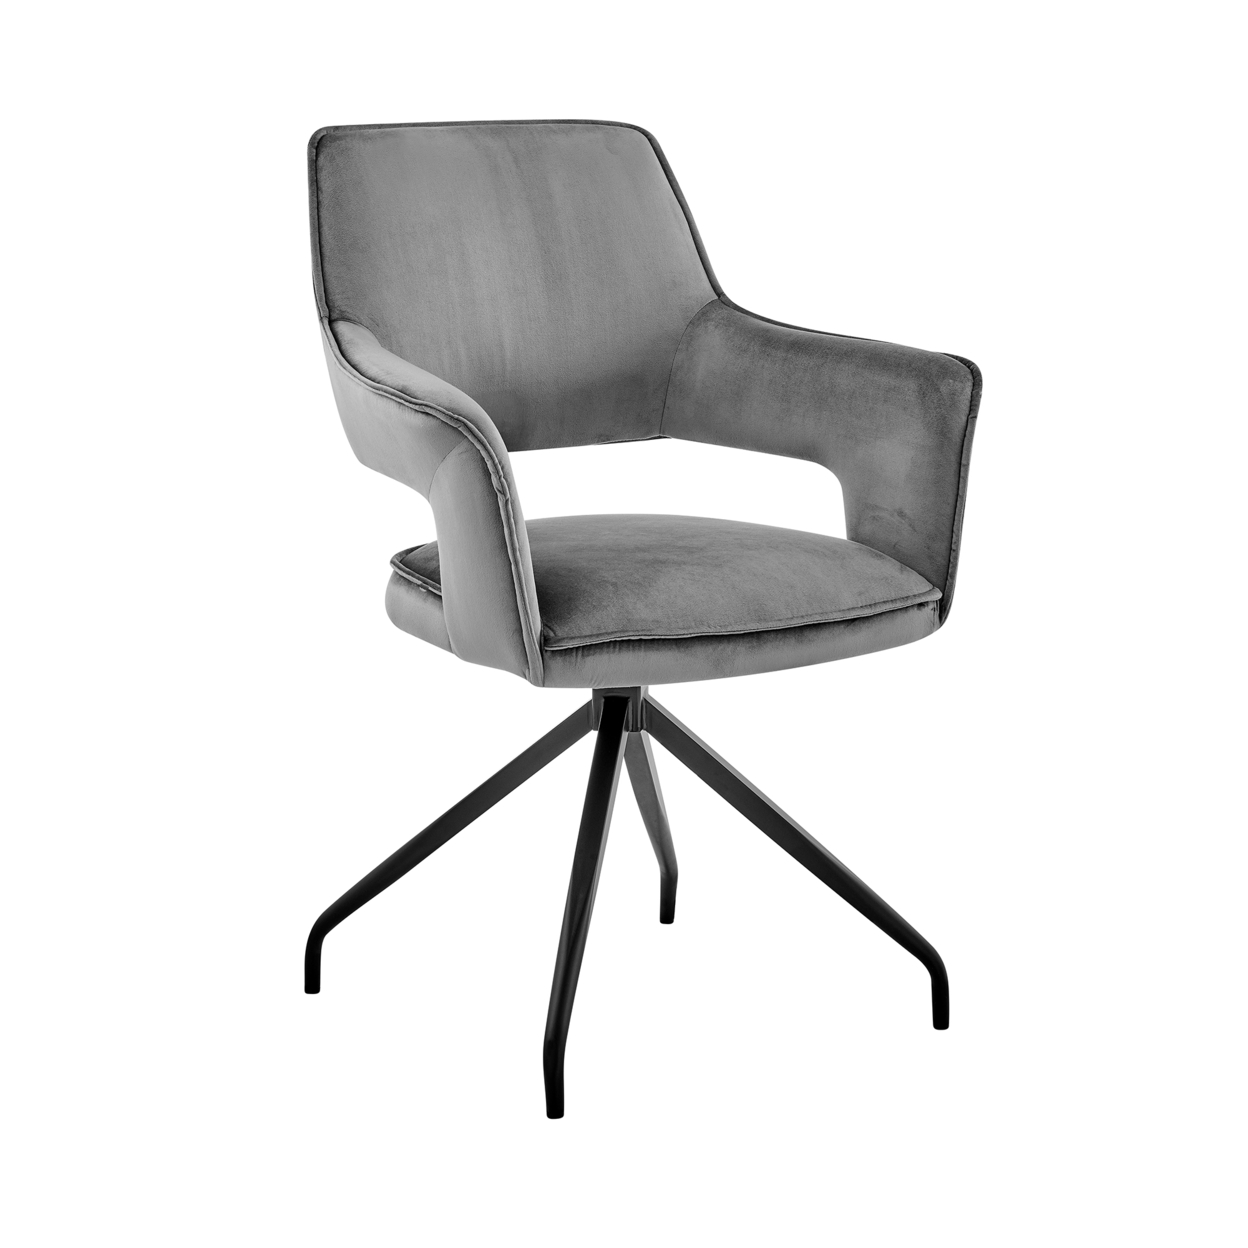 Velvet Upholstered Contemporary Accent Chair, Black And Gray- Saltoro Sherpi